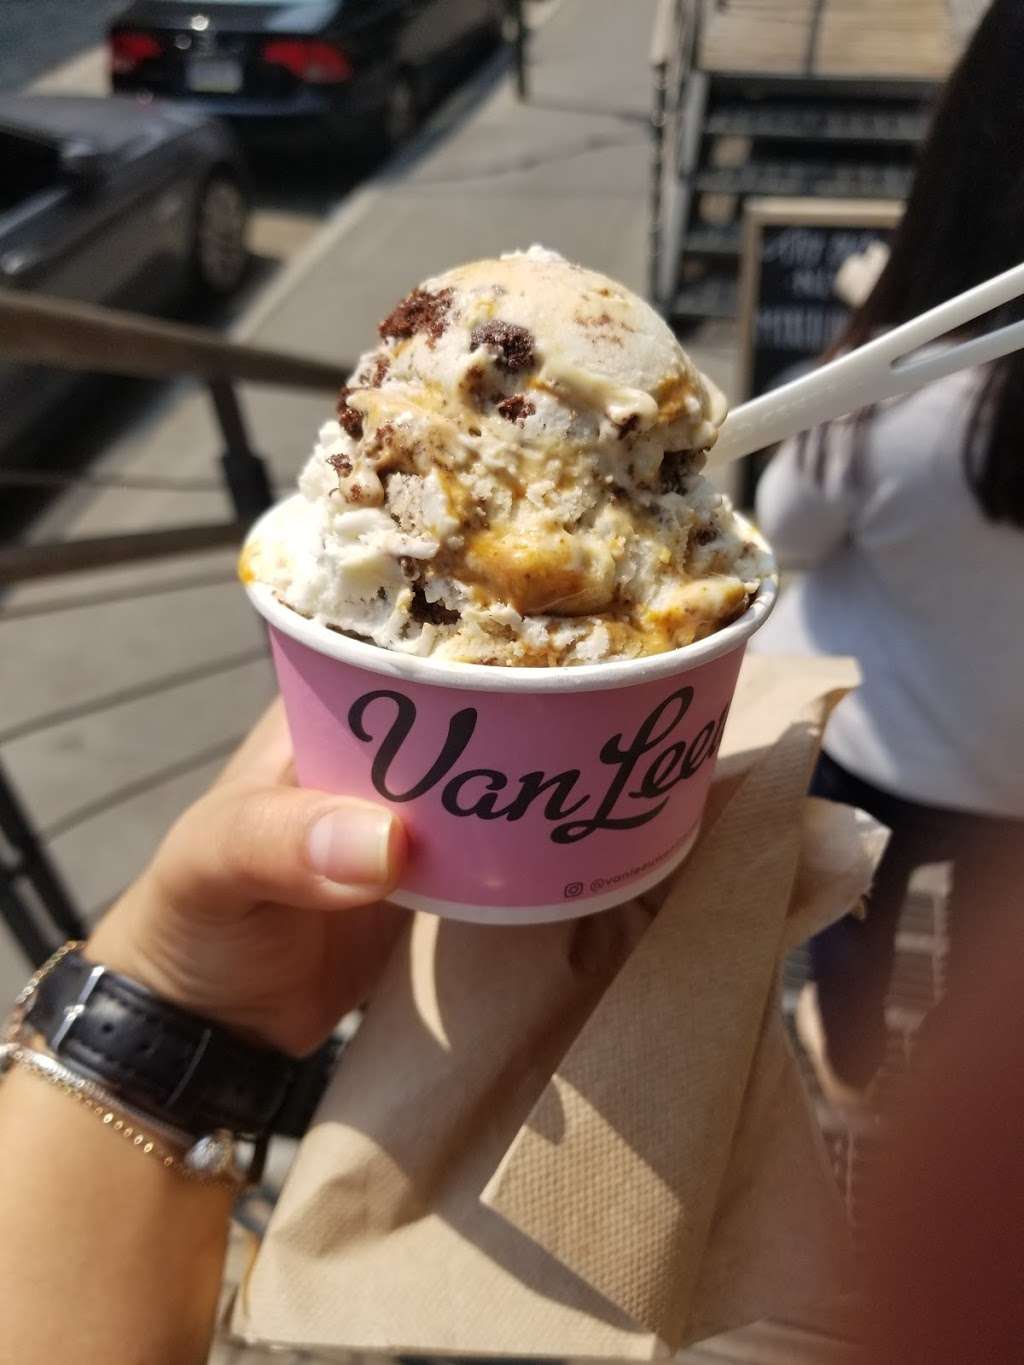 Van Leeuwen Ice Cream | Photo 2 of 10 | Address: 224 Front St, New York, NY 10038, USA | Phone: (917) 261-6376